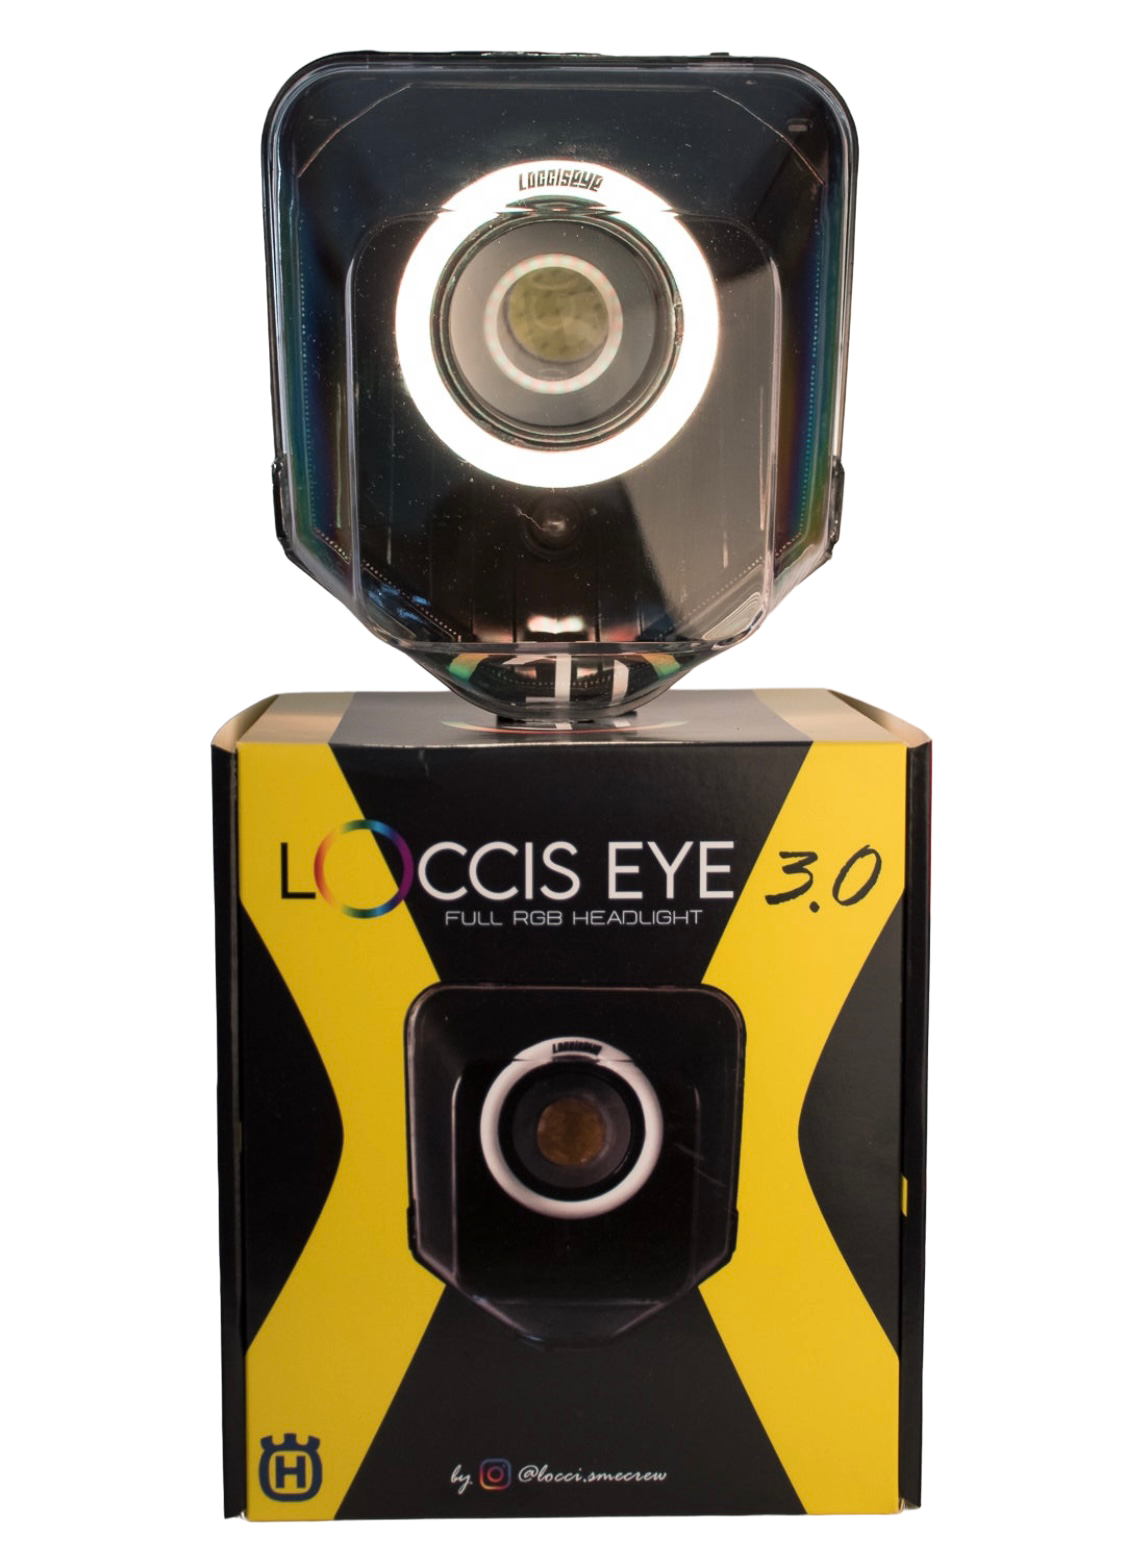 Loccis eye 3.0 husqvarna - RL_RacingStore